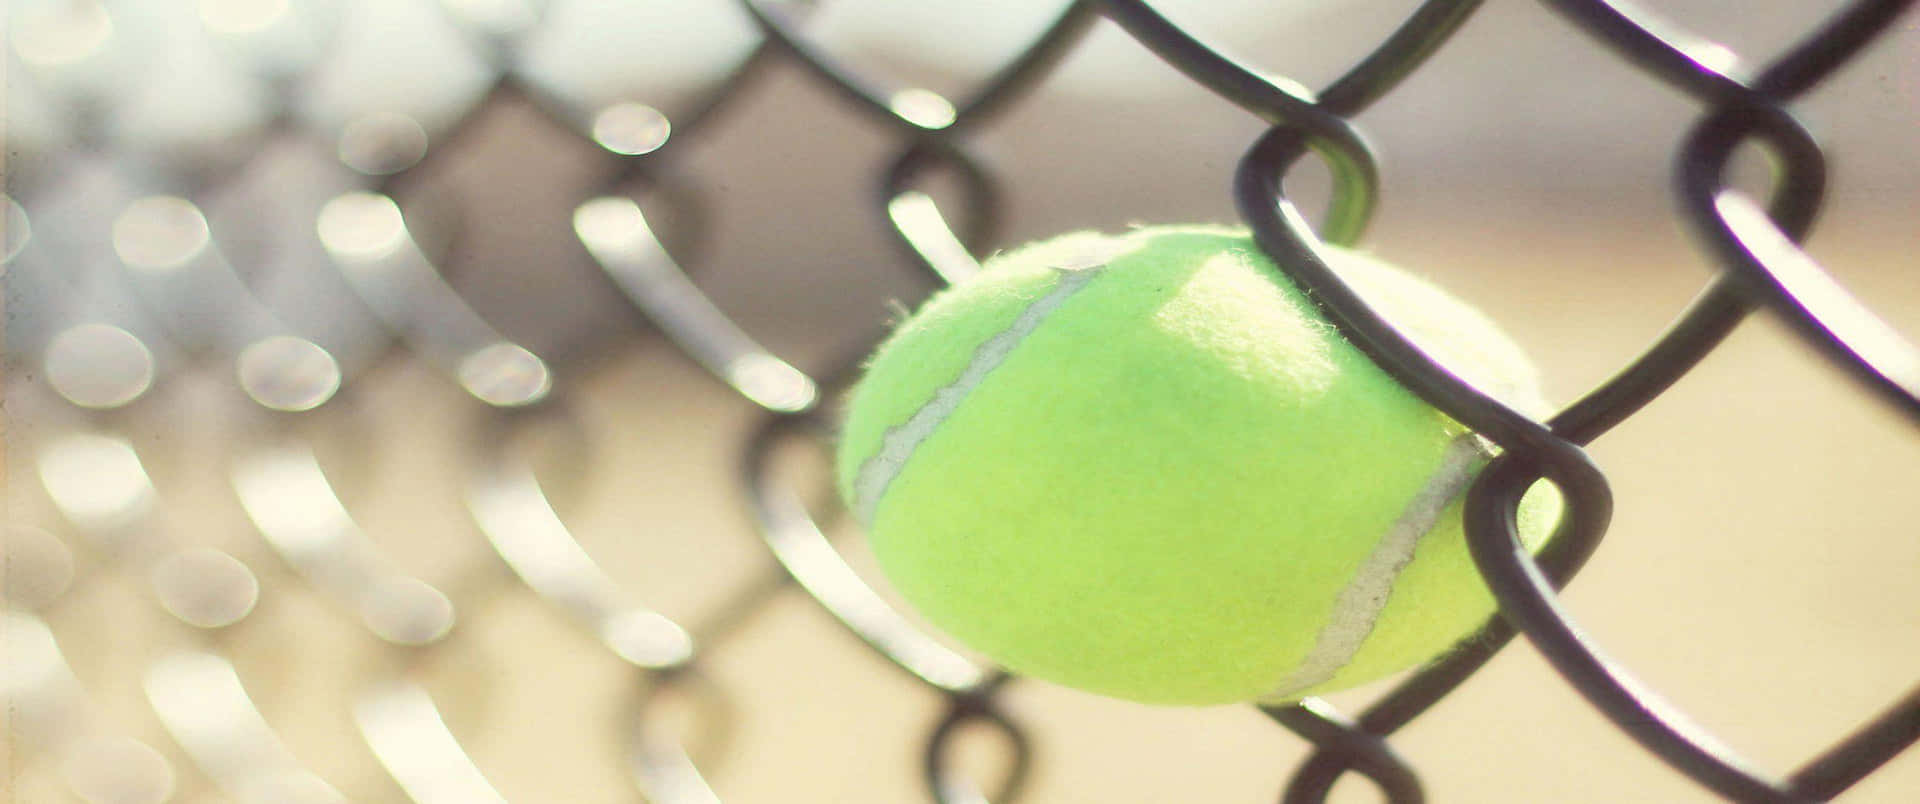 A closeup of a Tennis Racket being Swung at a Tennis Court